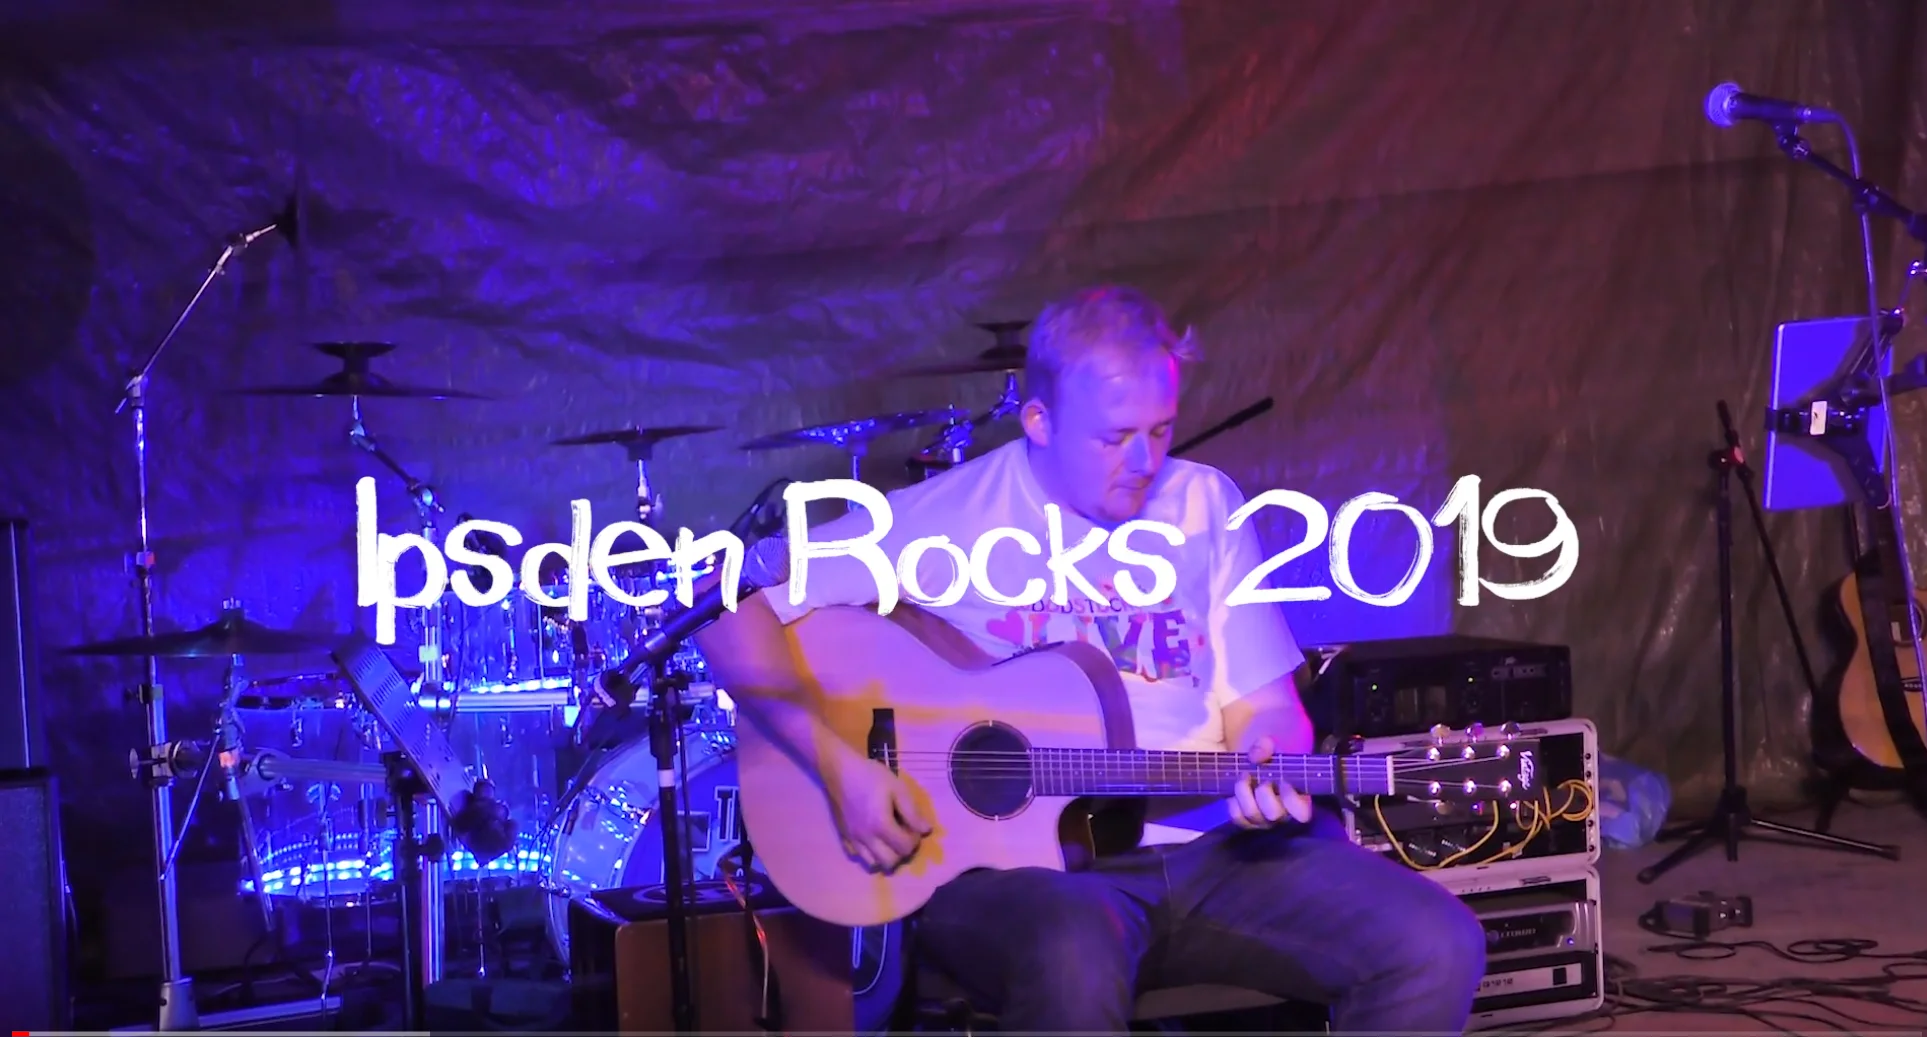 Ipsden Rocks 2019